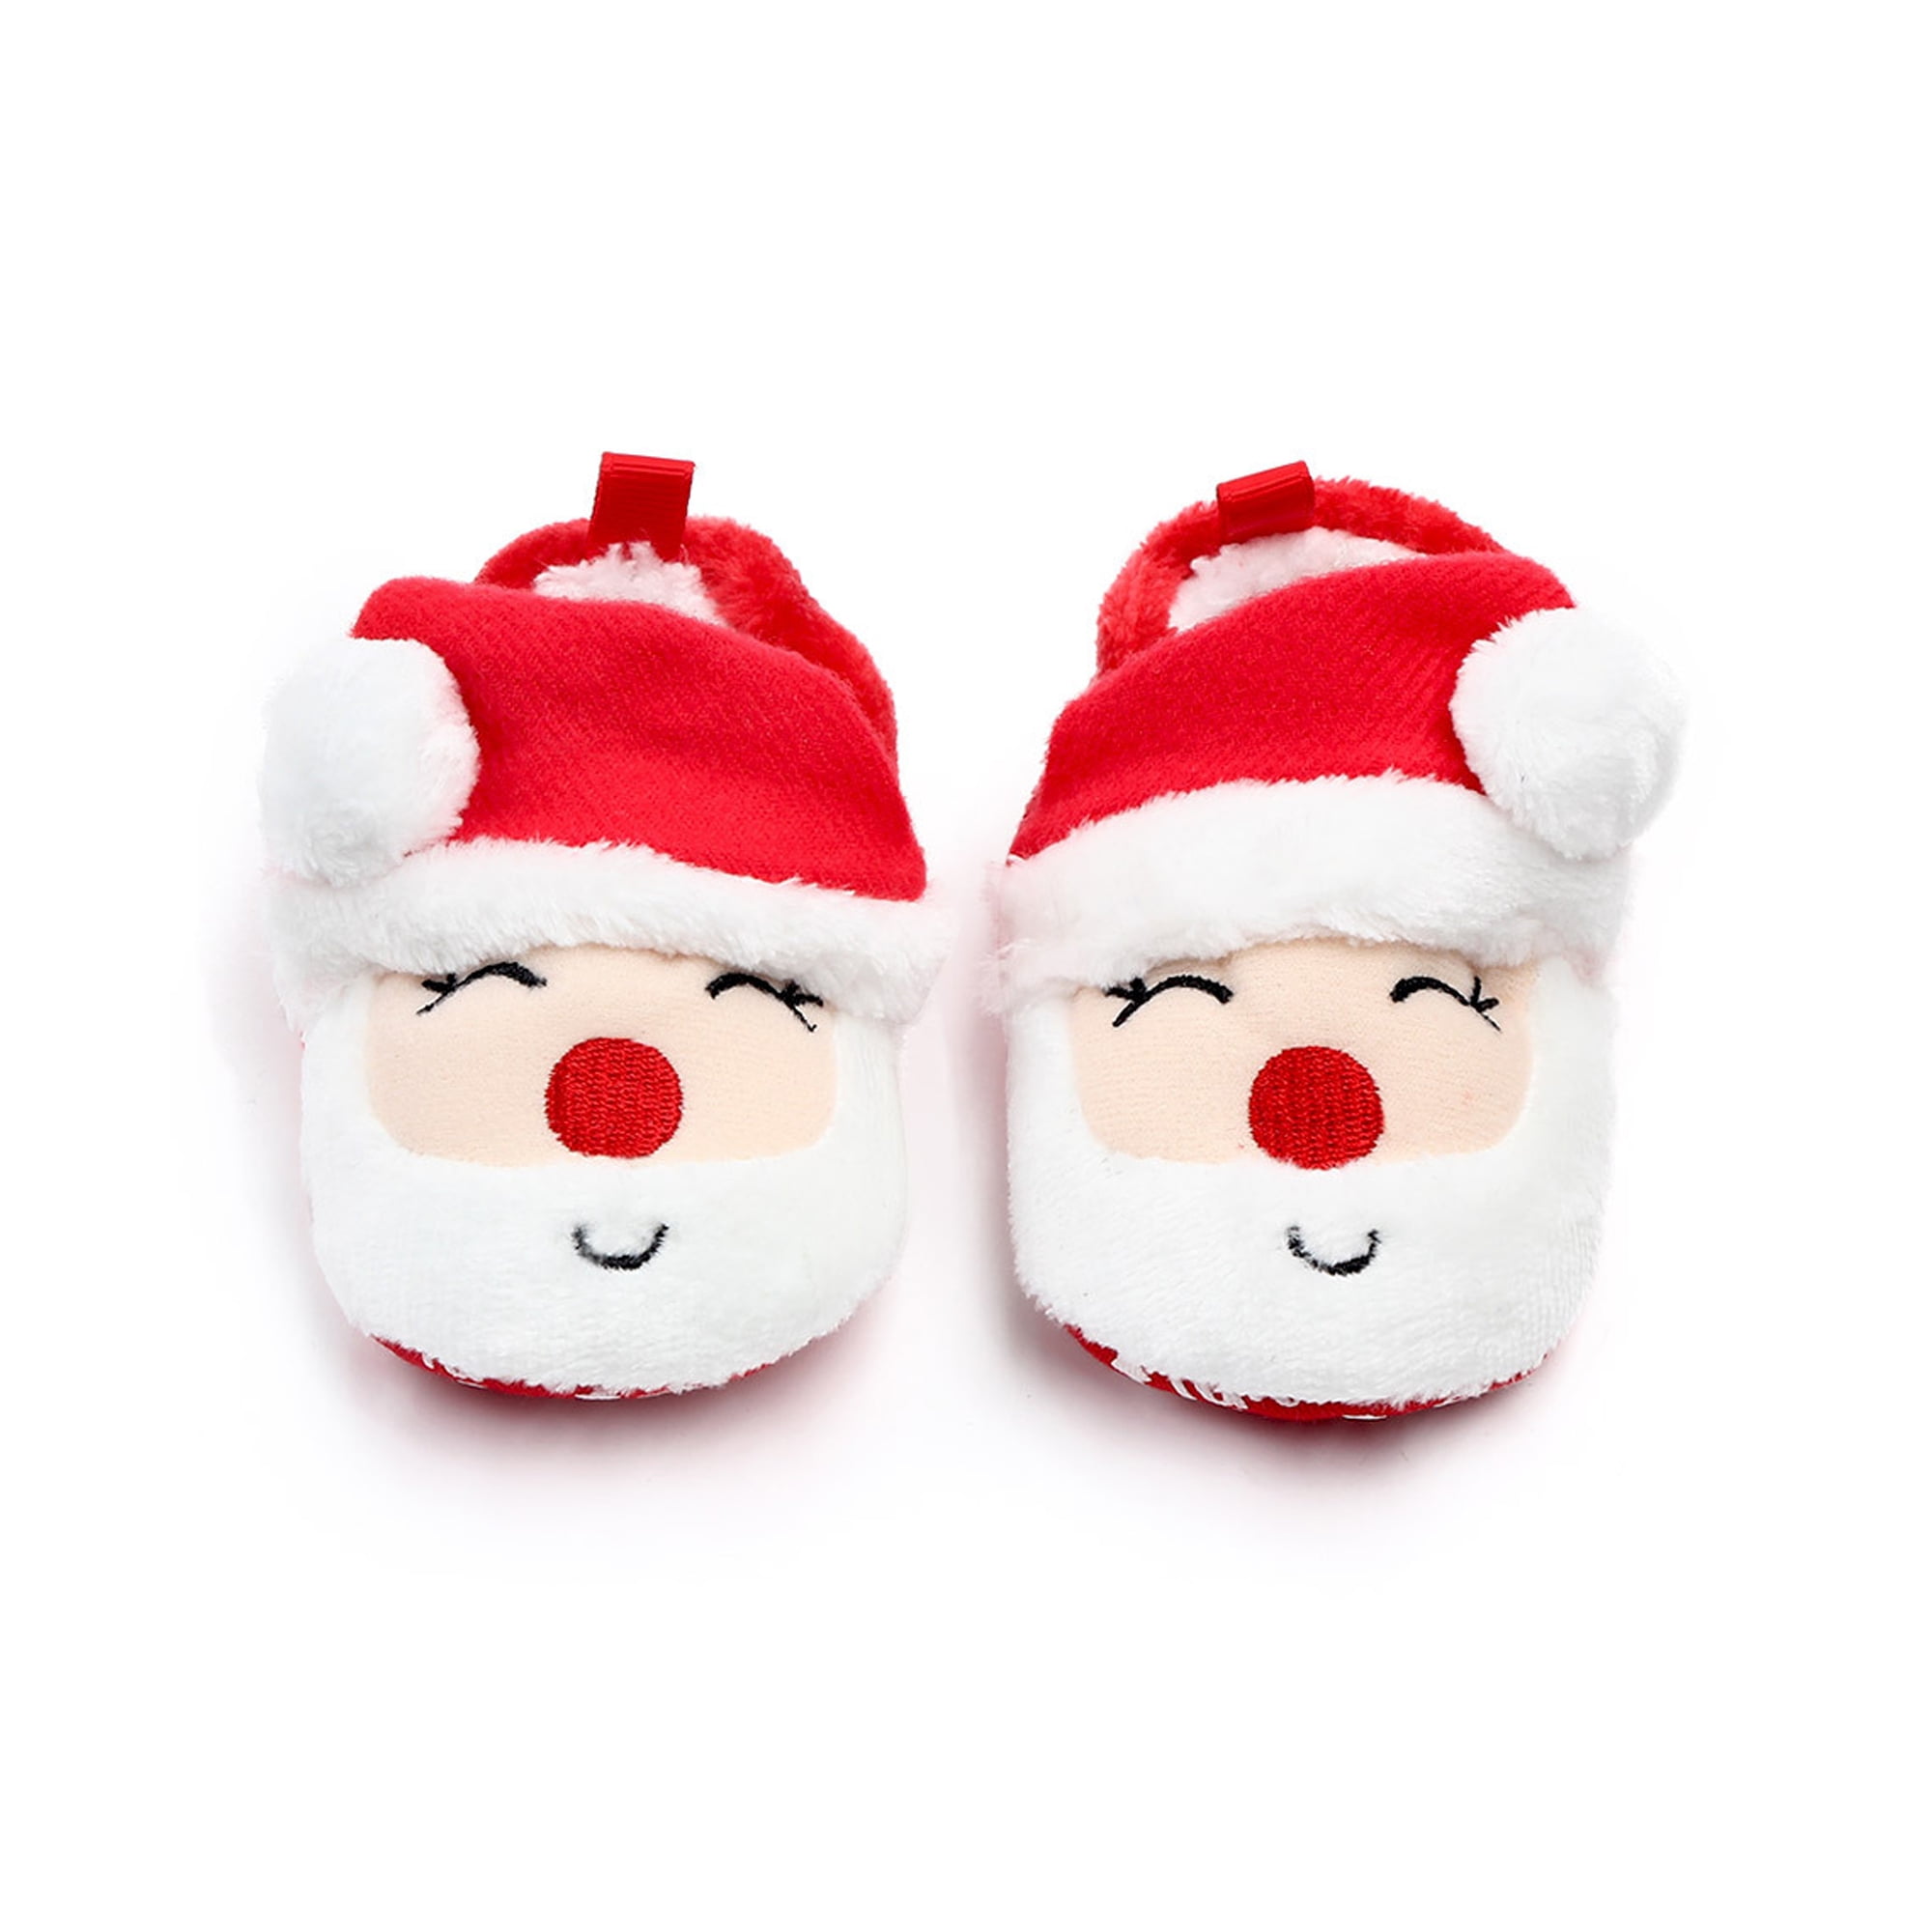 Infant Newborn Baby Girls Boys Christmas Boots Santa Claus Soft Sole Crib Prewalker Shoes Footwear 